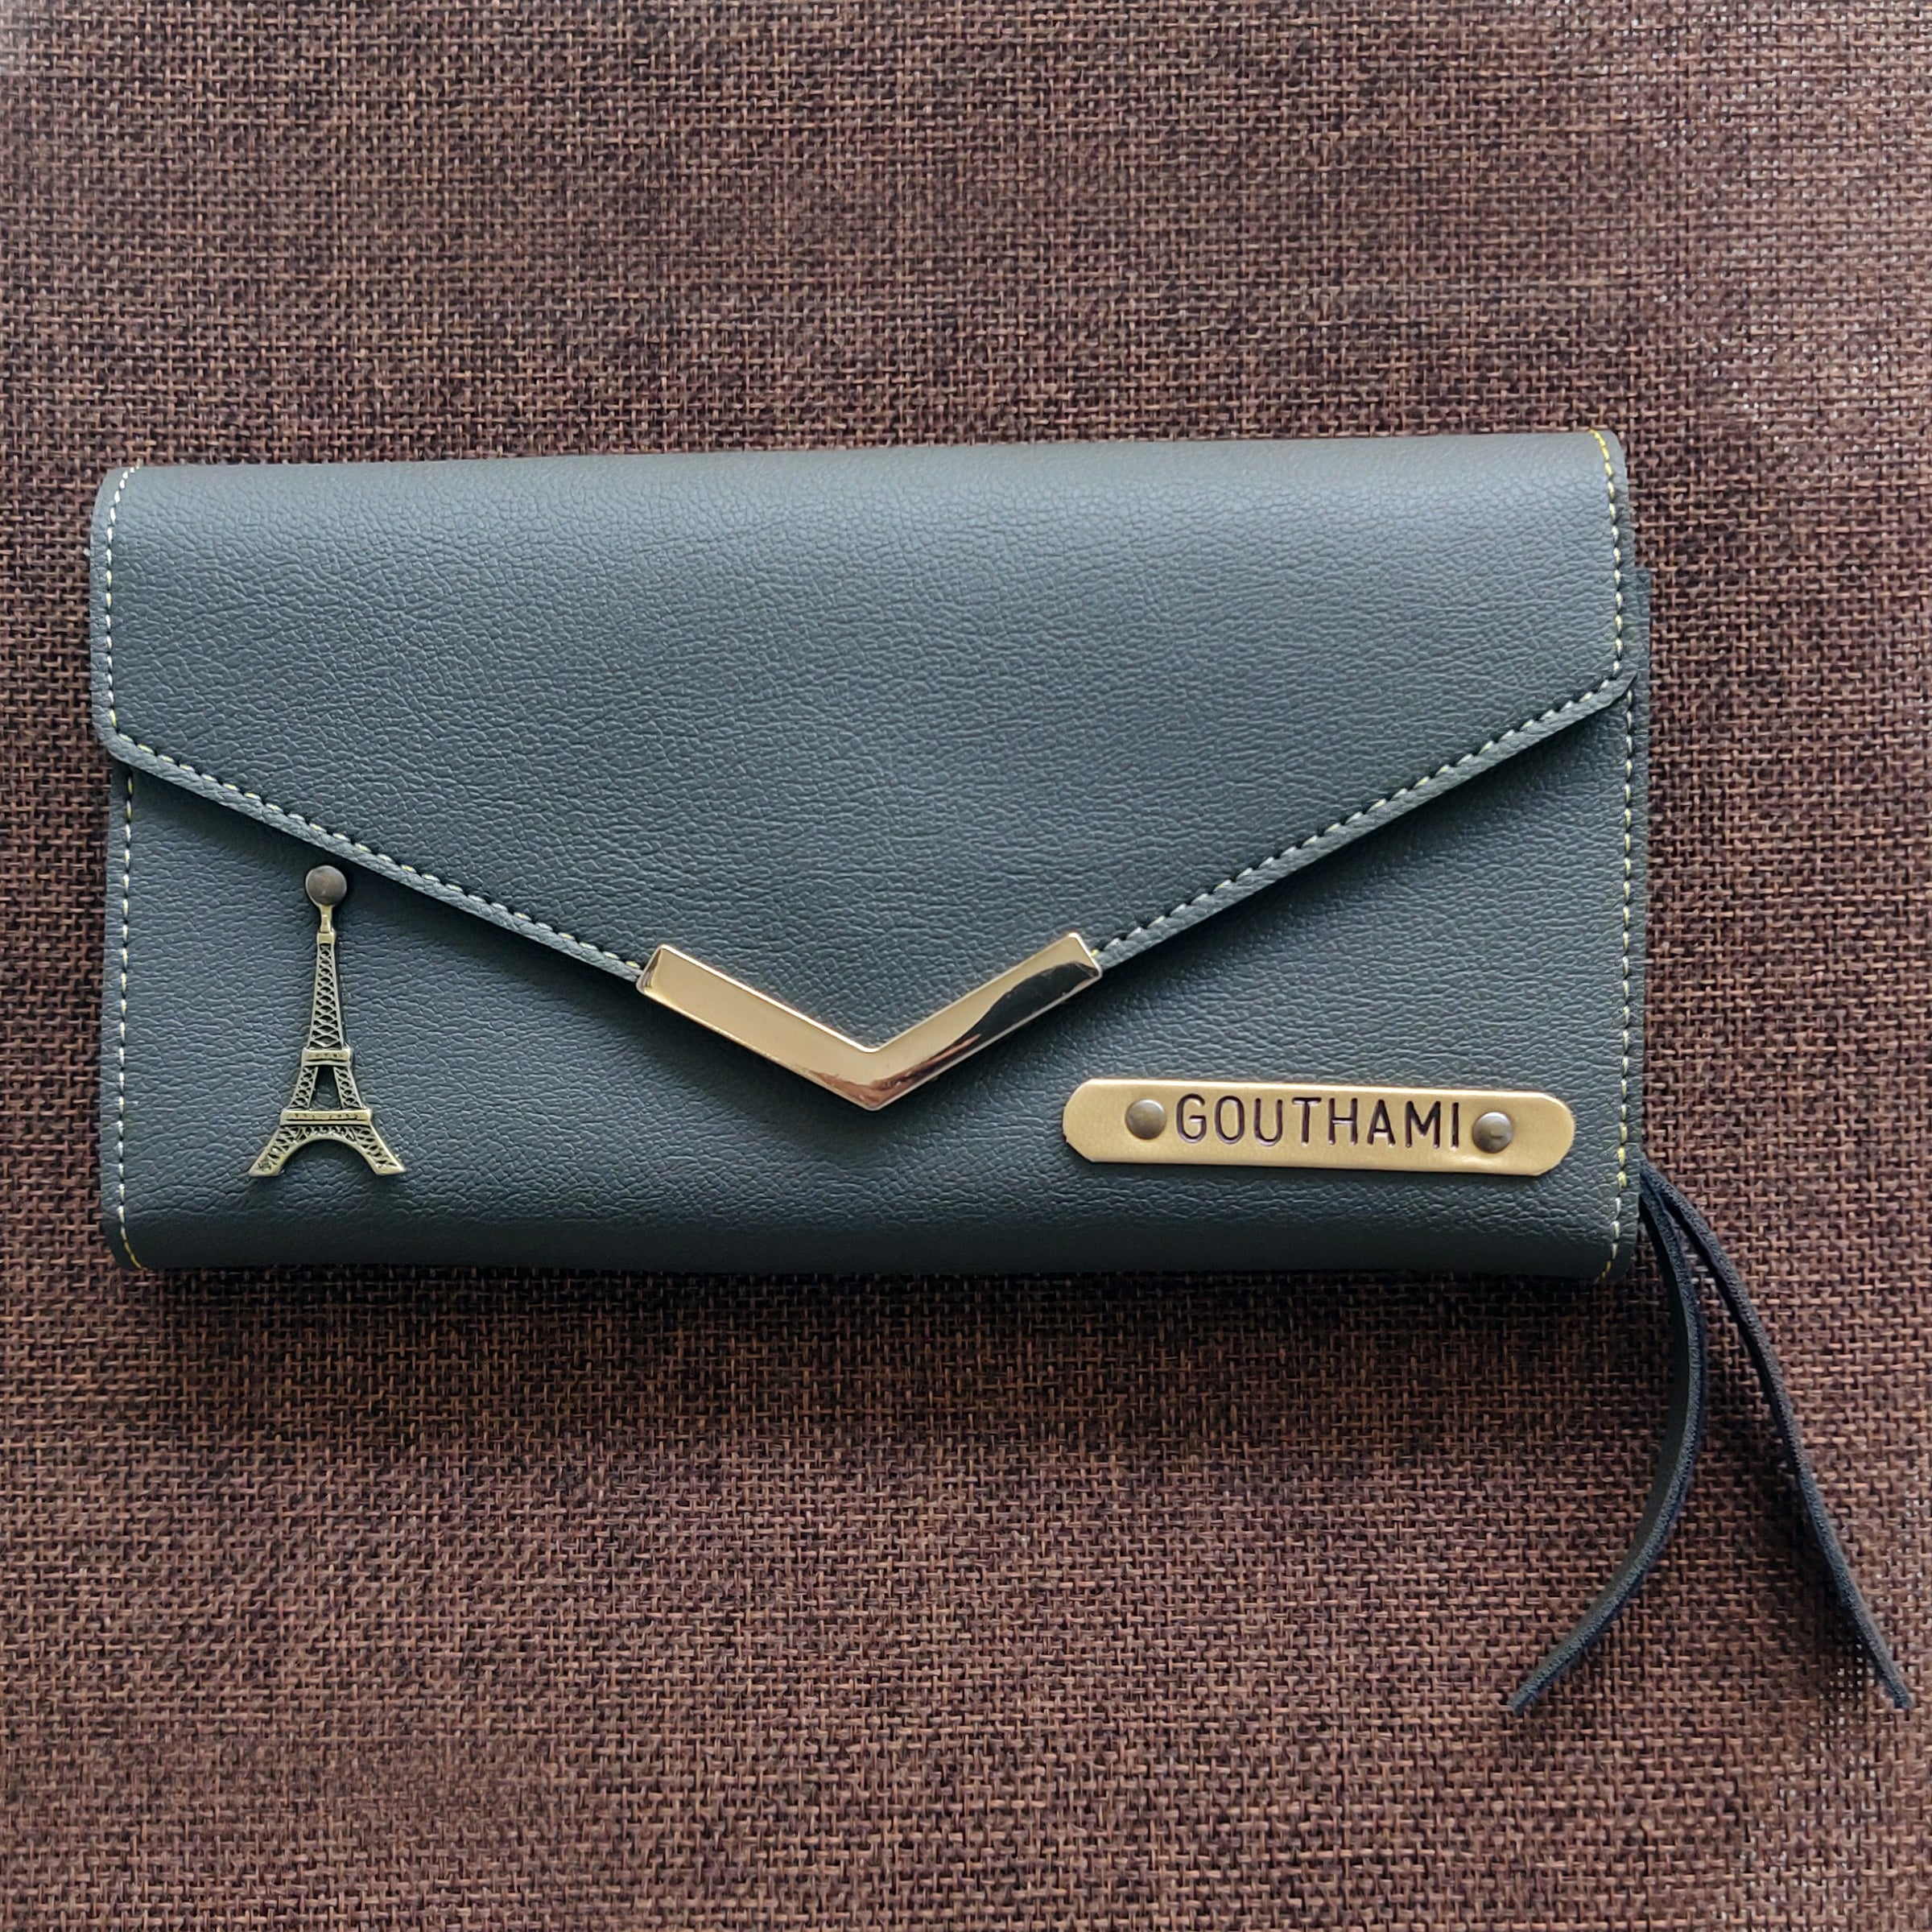 Genuine Leather Latest Fashion Bi-Fold Women's Long Wallet